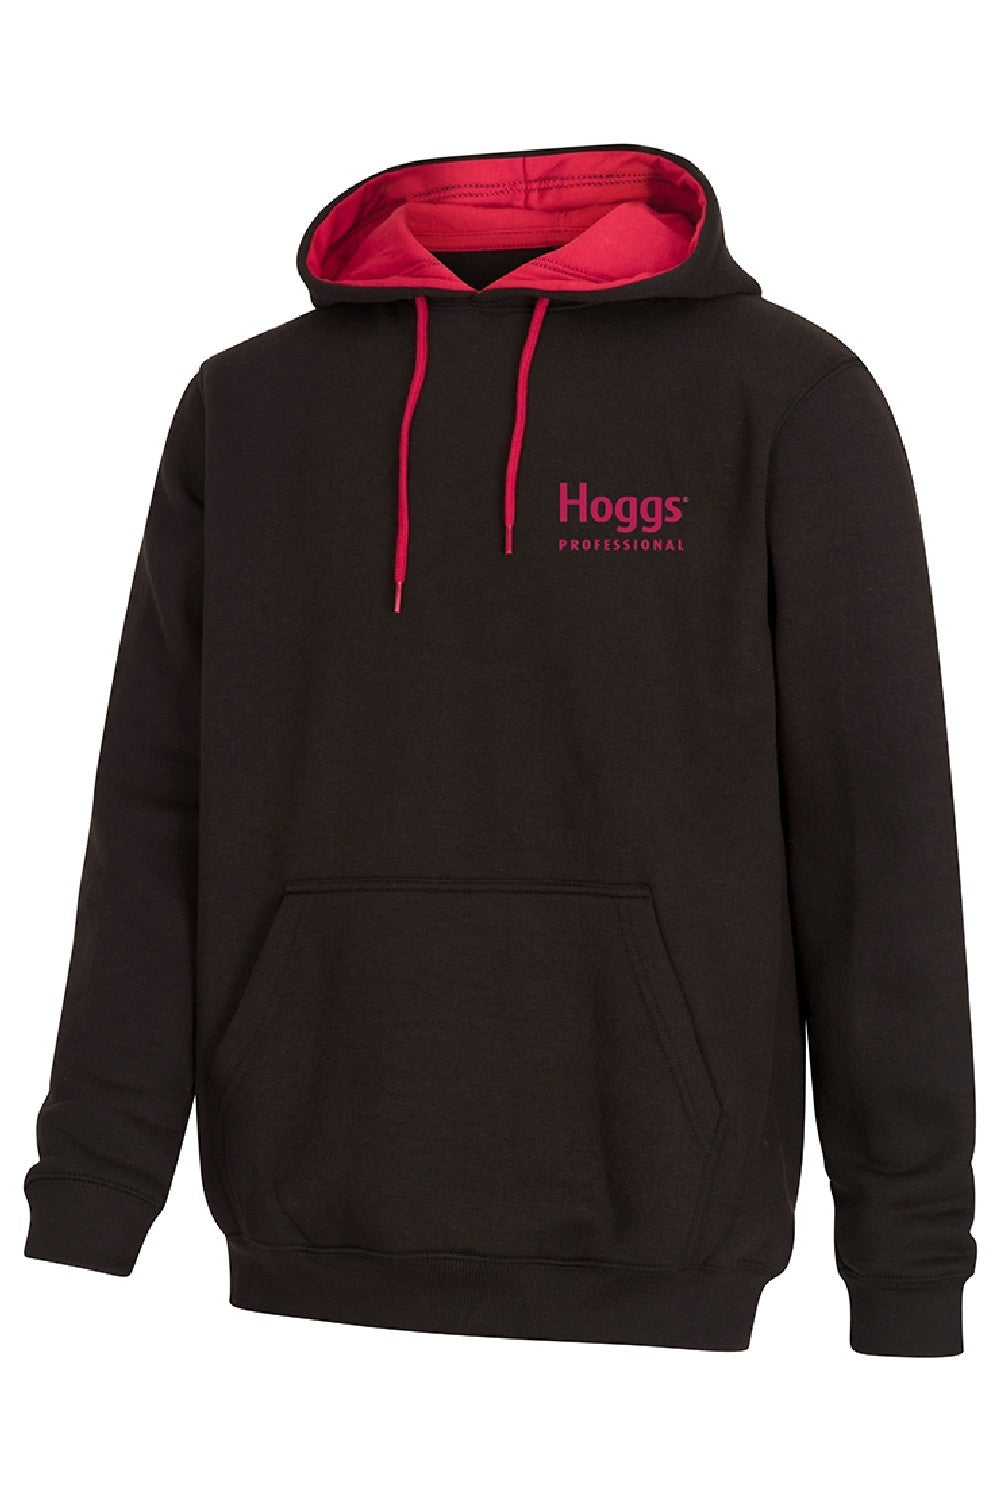 Hoggs of Fife Hoggs Professional Hoodie